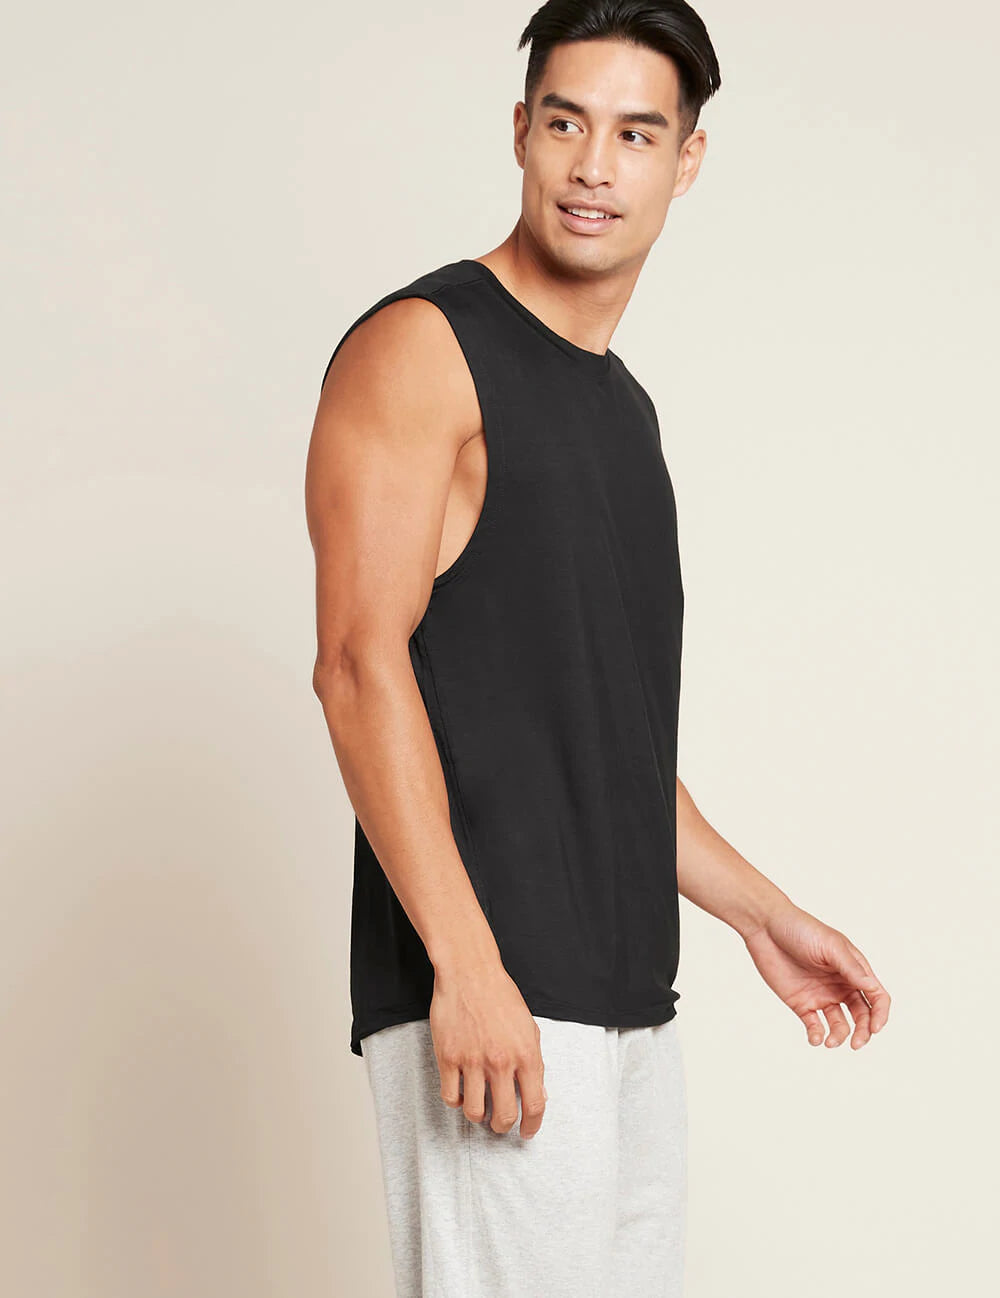 Mens Active Muscle T-shirt- Black